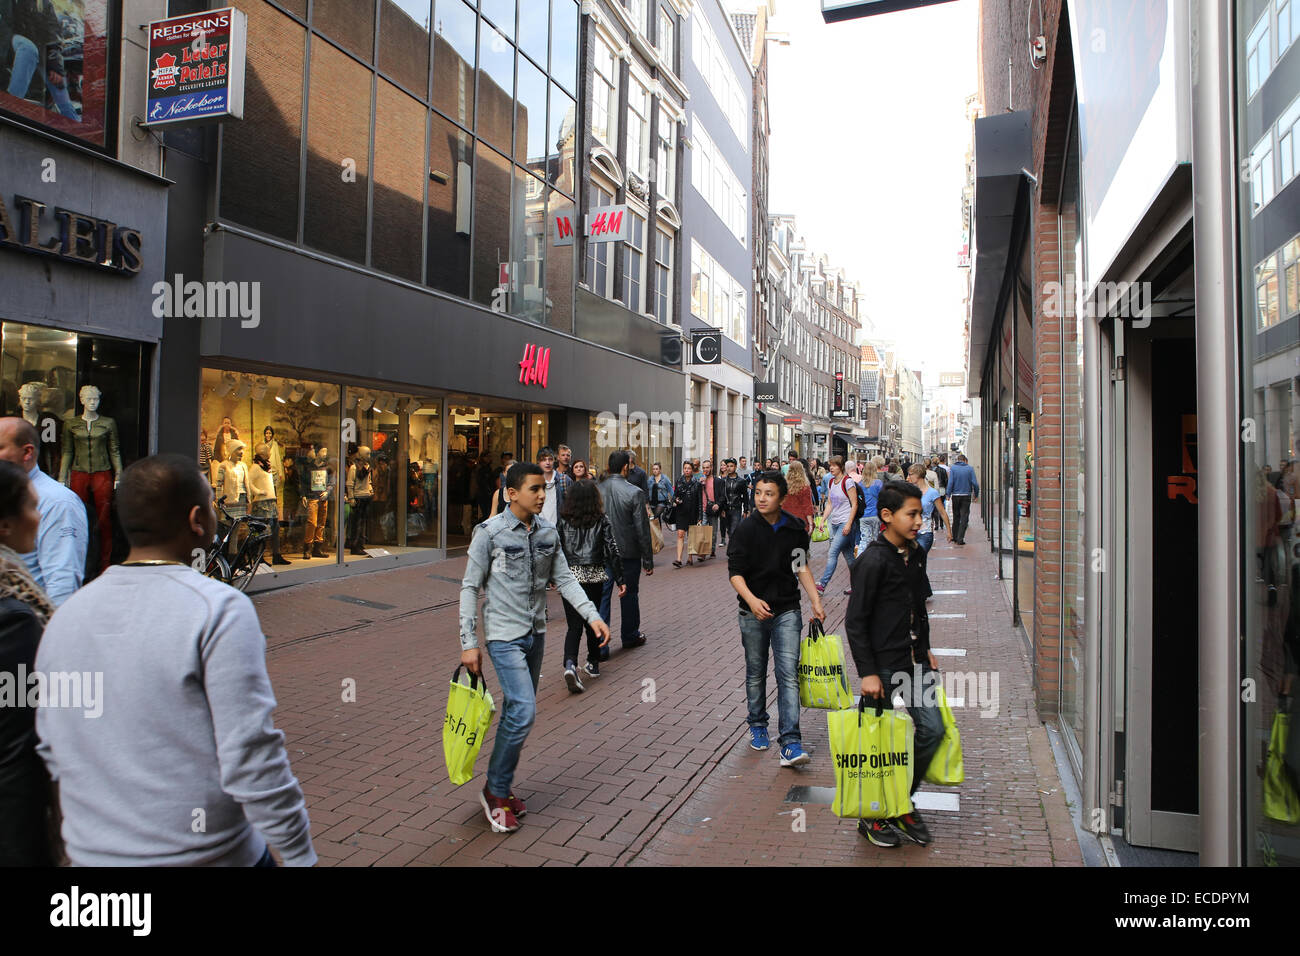 amsterdam shopping street Kalverstraat Stock Photo